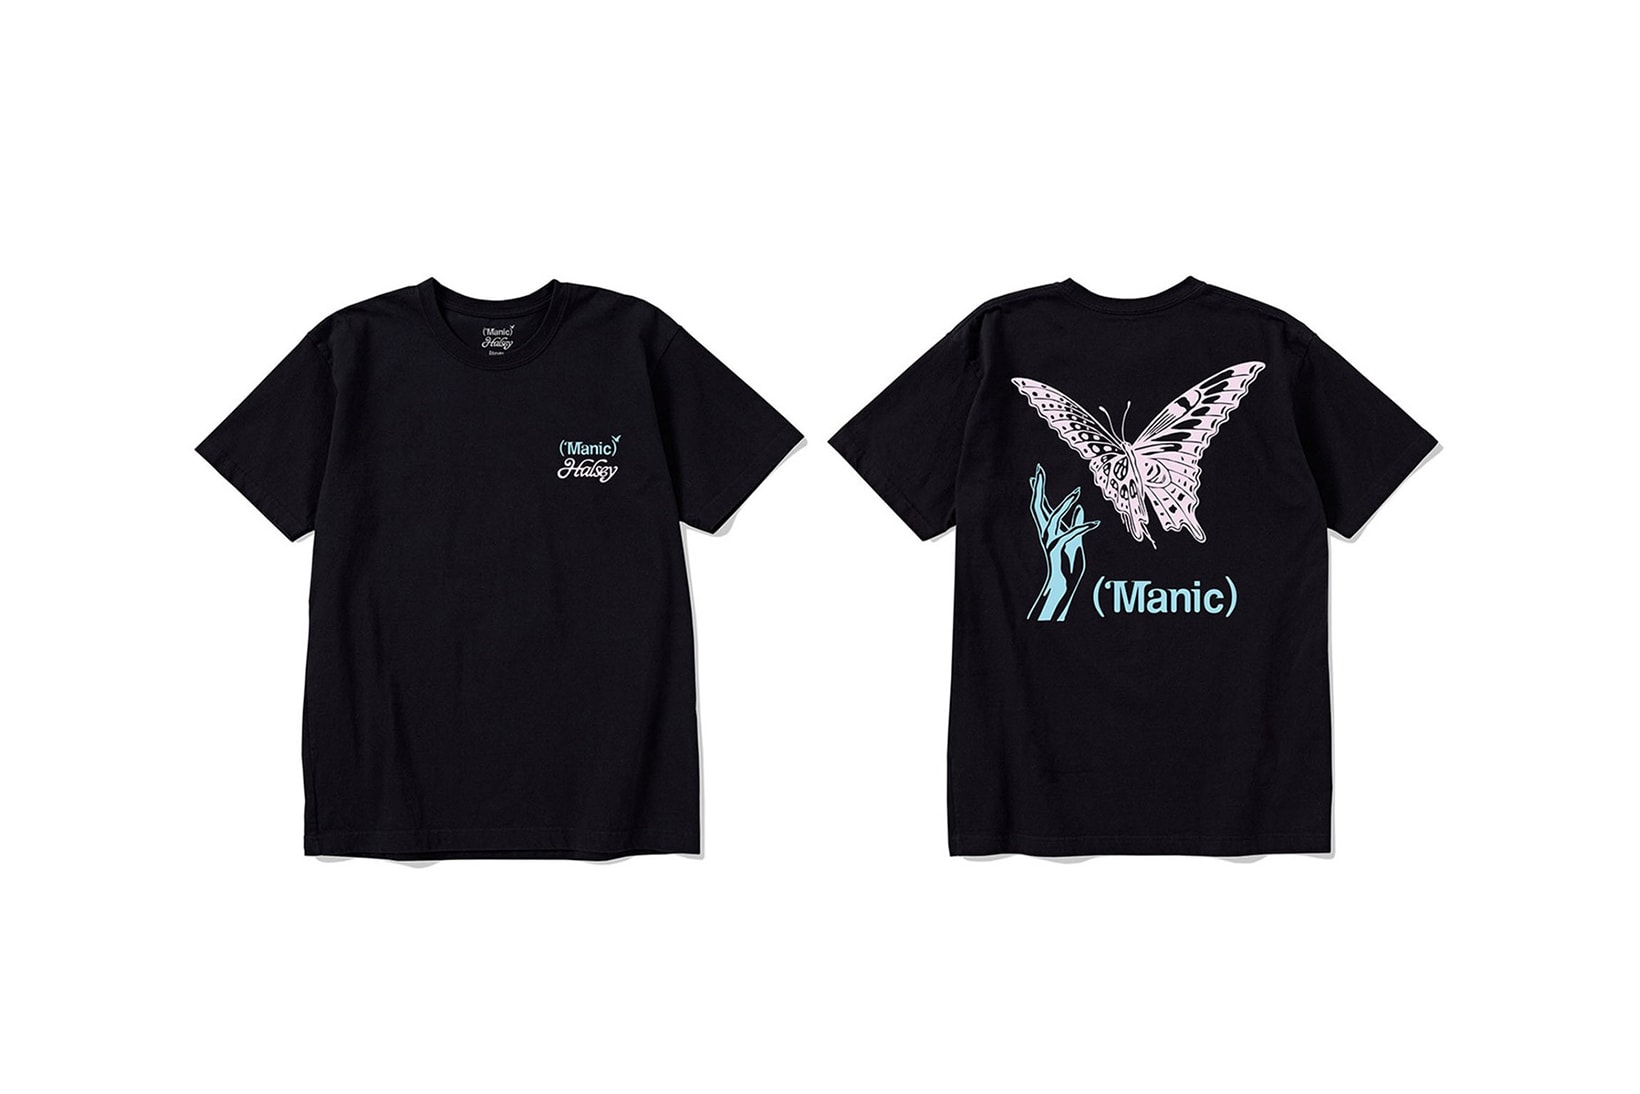 verdy halsey collaboration manic album merch hoodies t shirts black white butterfly 